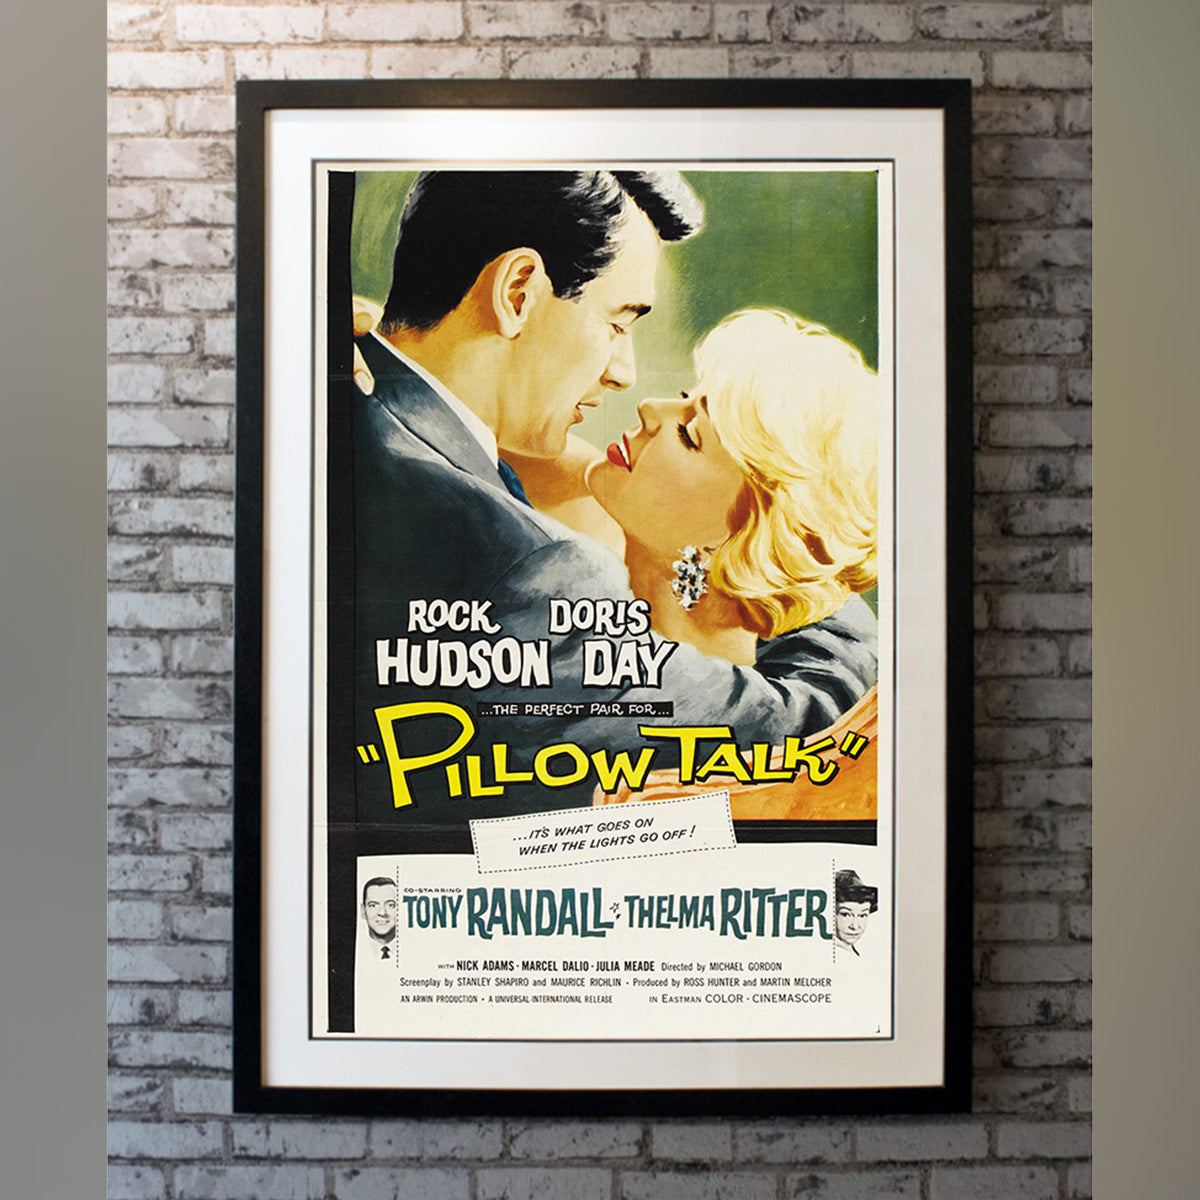 Original Movie Poster of Pillow Talk (1959)